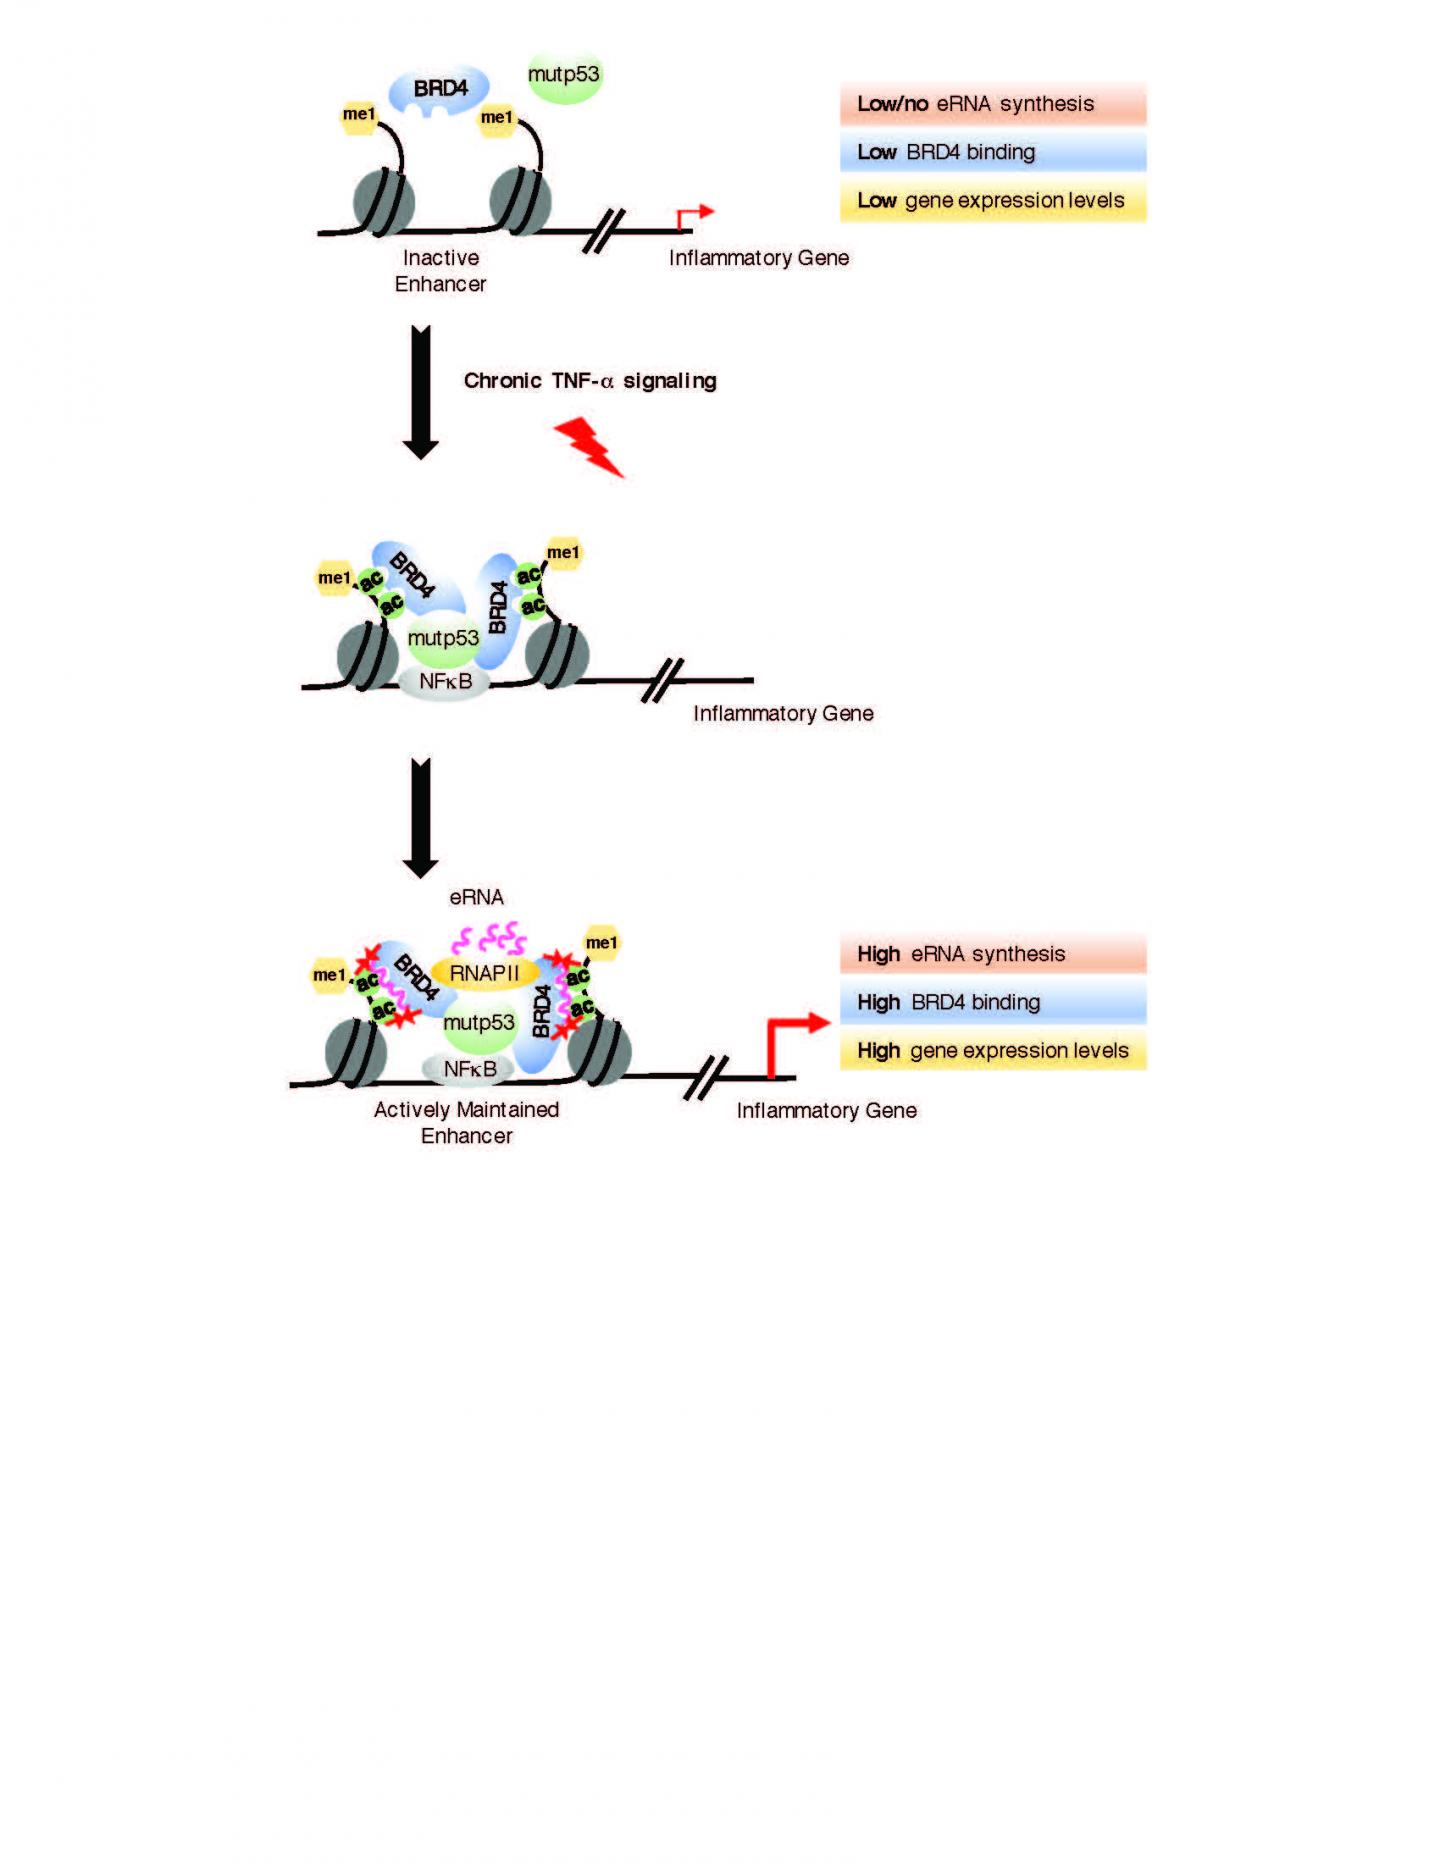 Model of eRNA-BRD4 Interaction